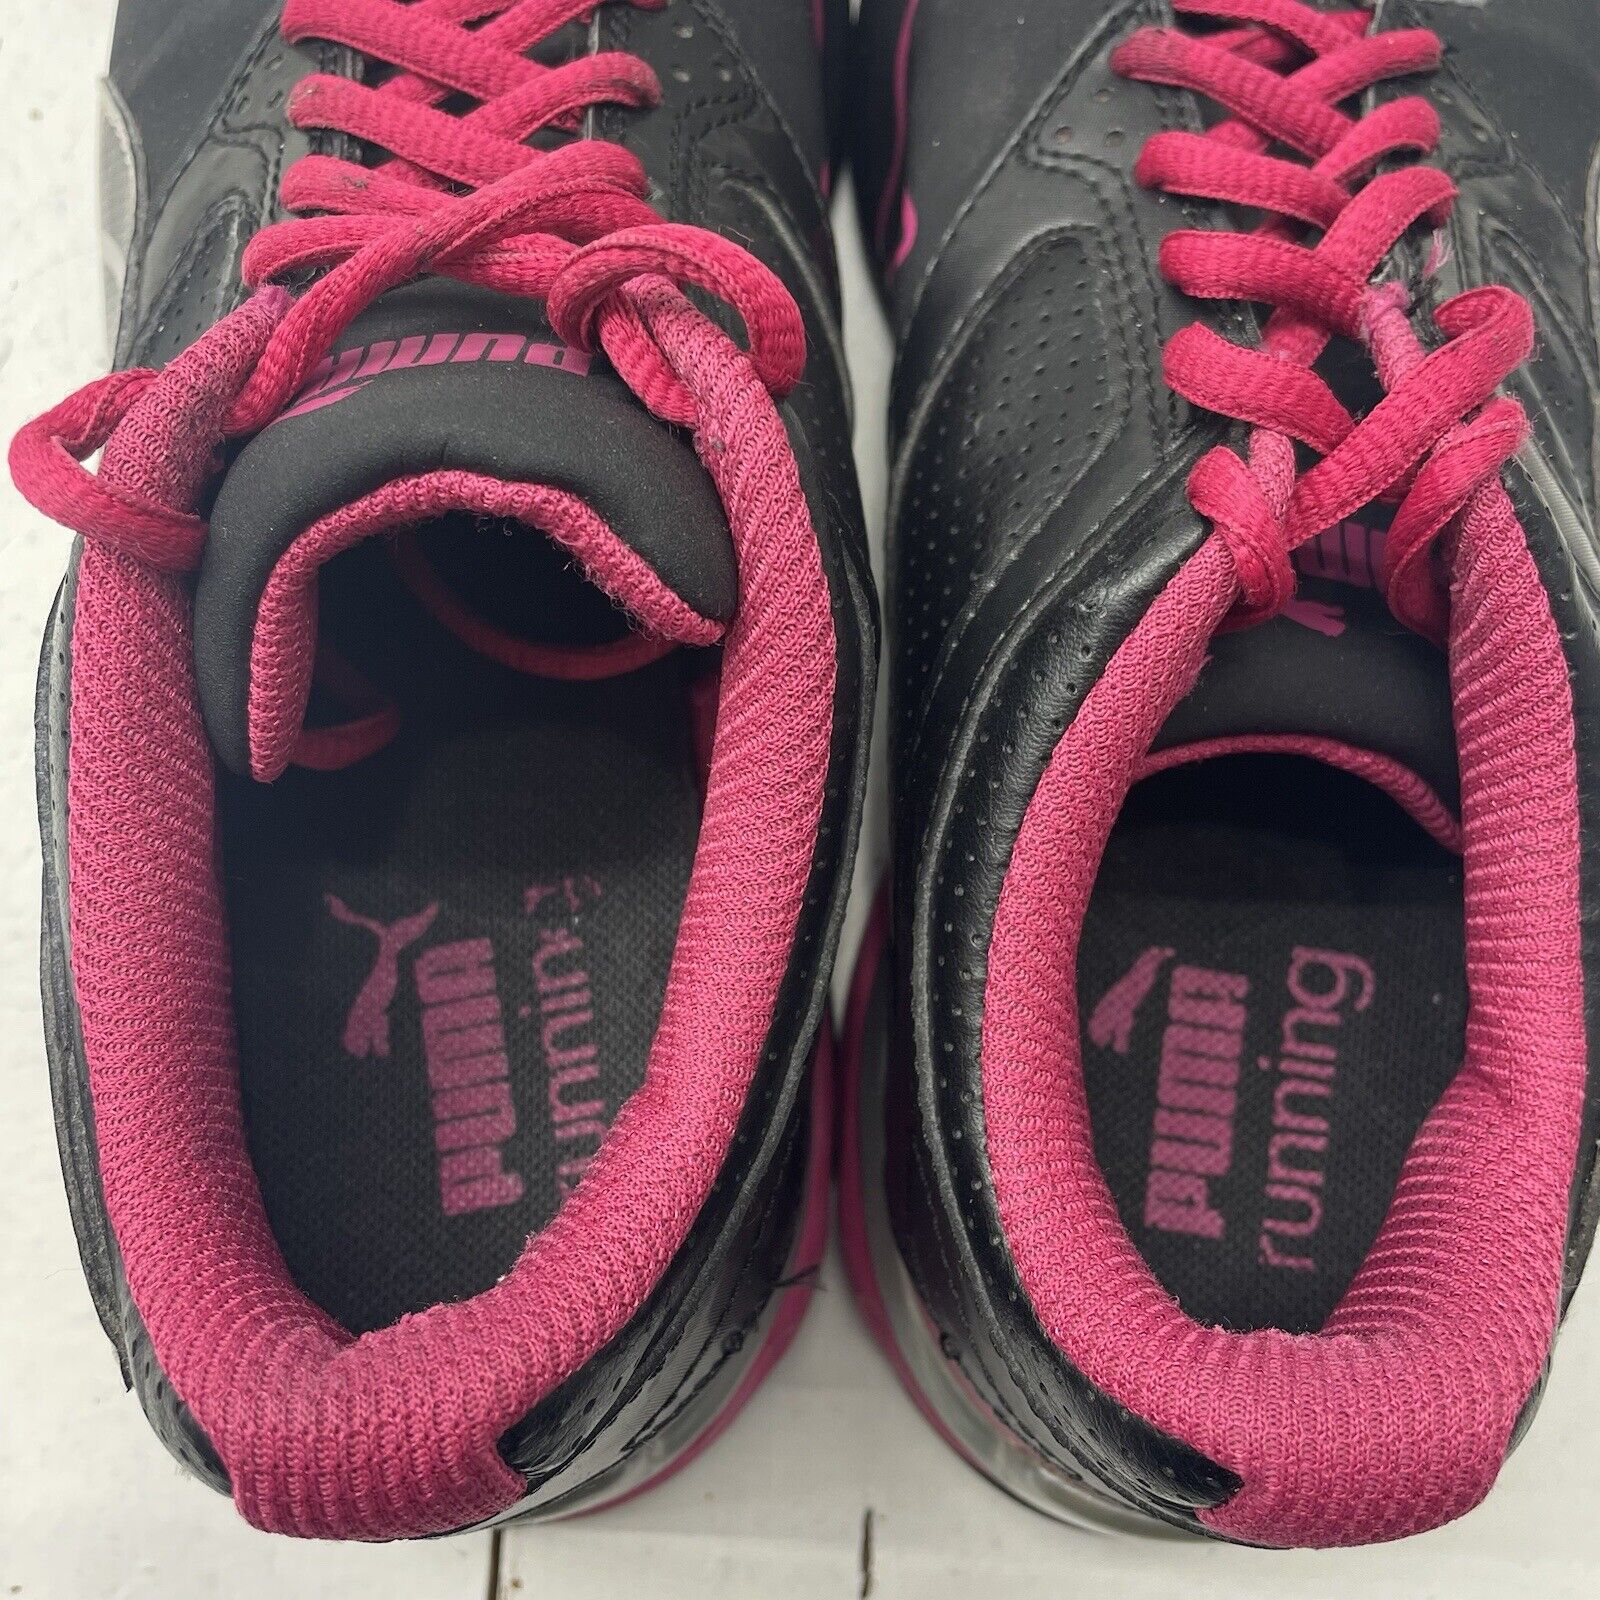 Puma Black Silver Pink Tazon 6 Athletic Shoes 186905 05 Sneakers Women -  beyond exchange